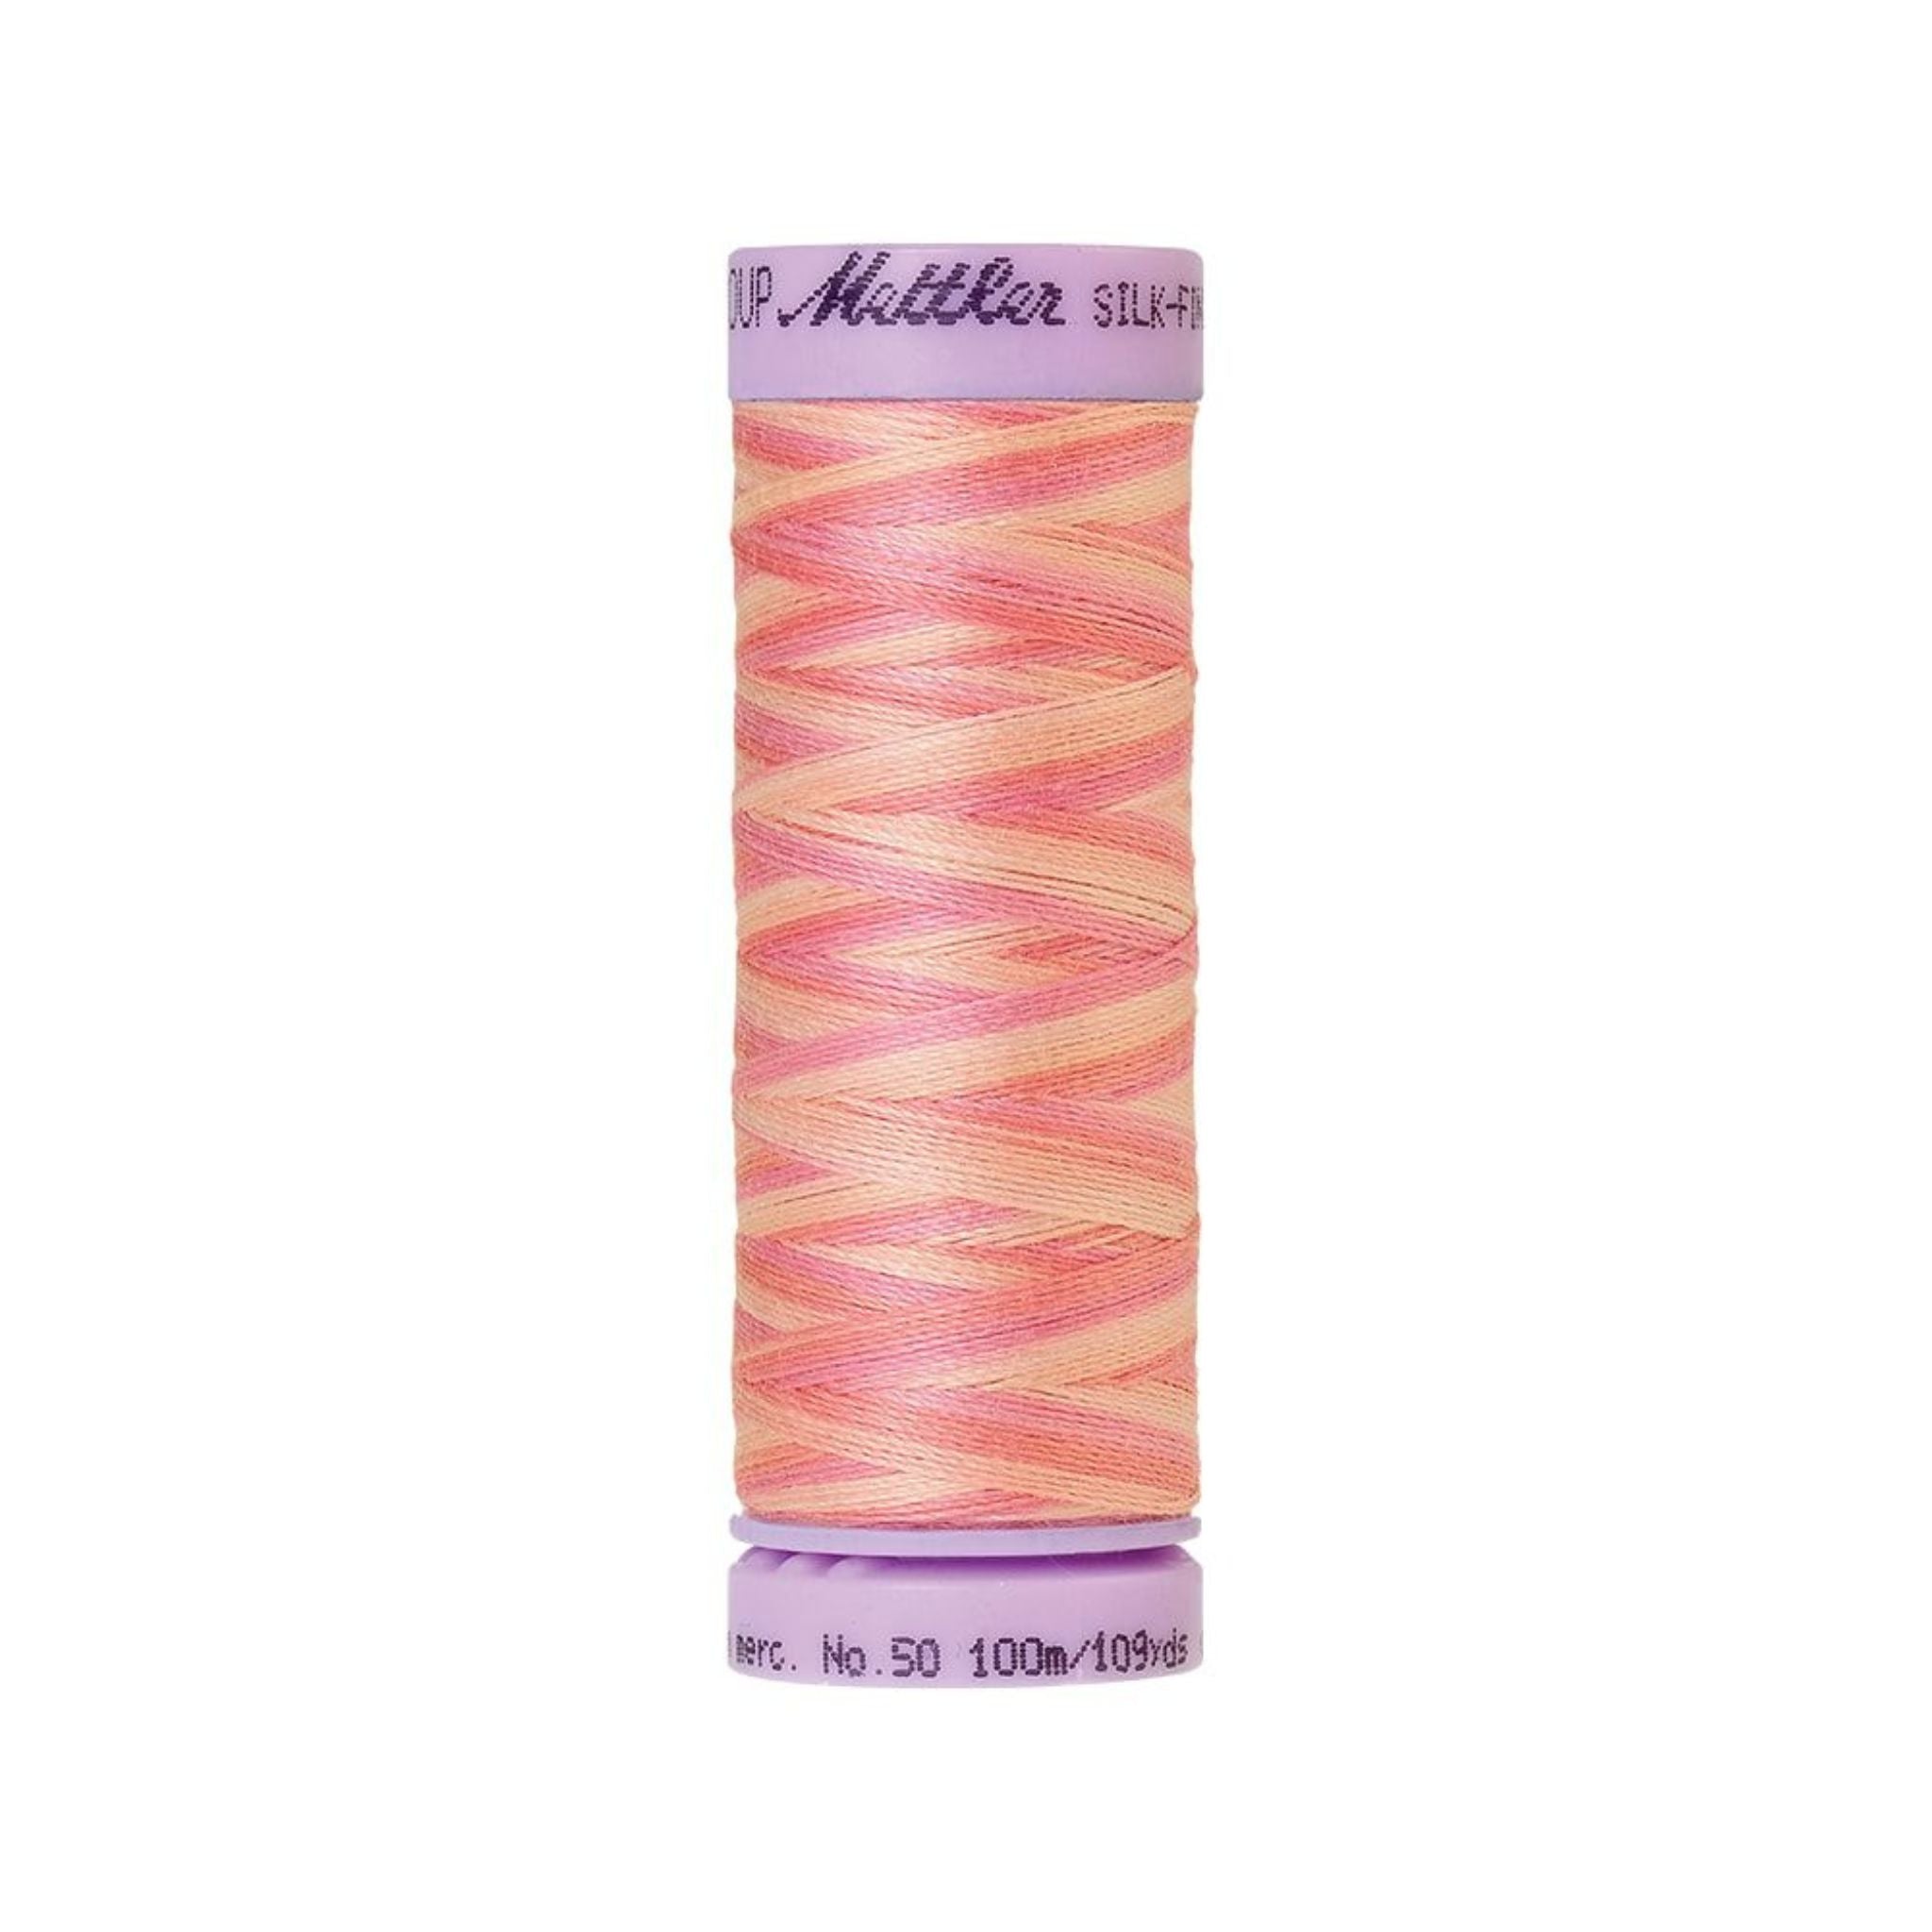 Dusty Rose Silk Thread Finish Multi Colour Cot 50 100m - 9847 Mettler